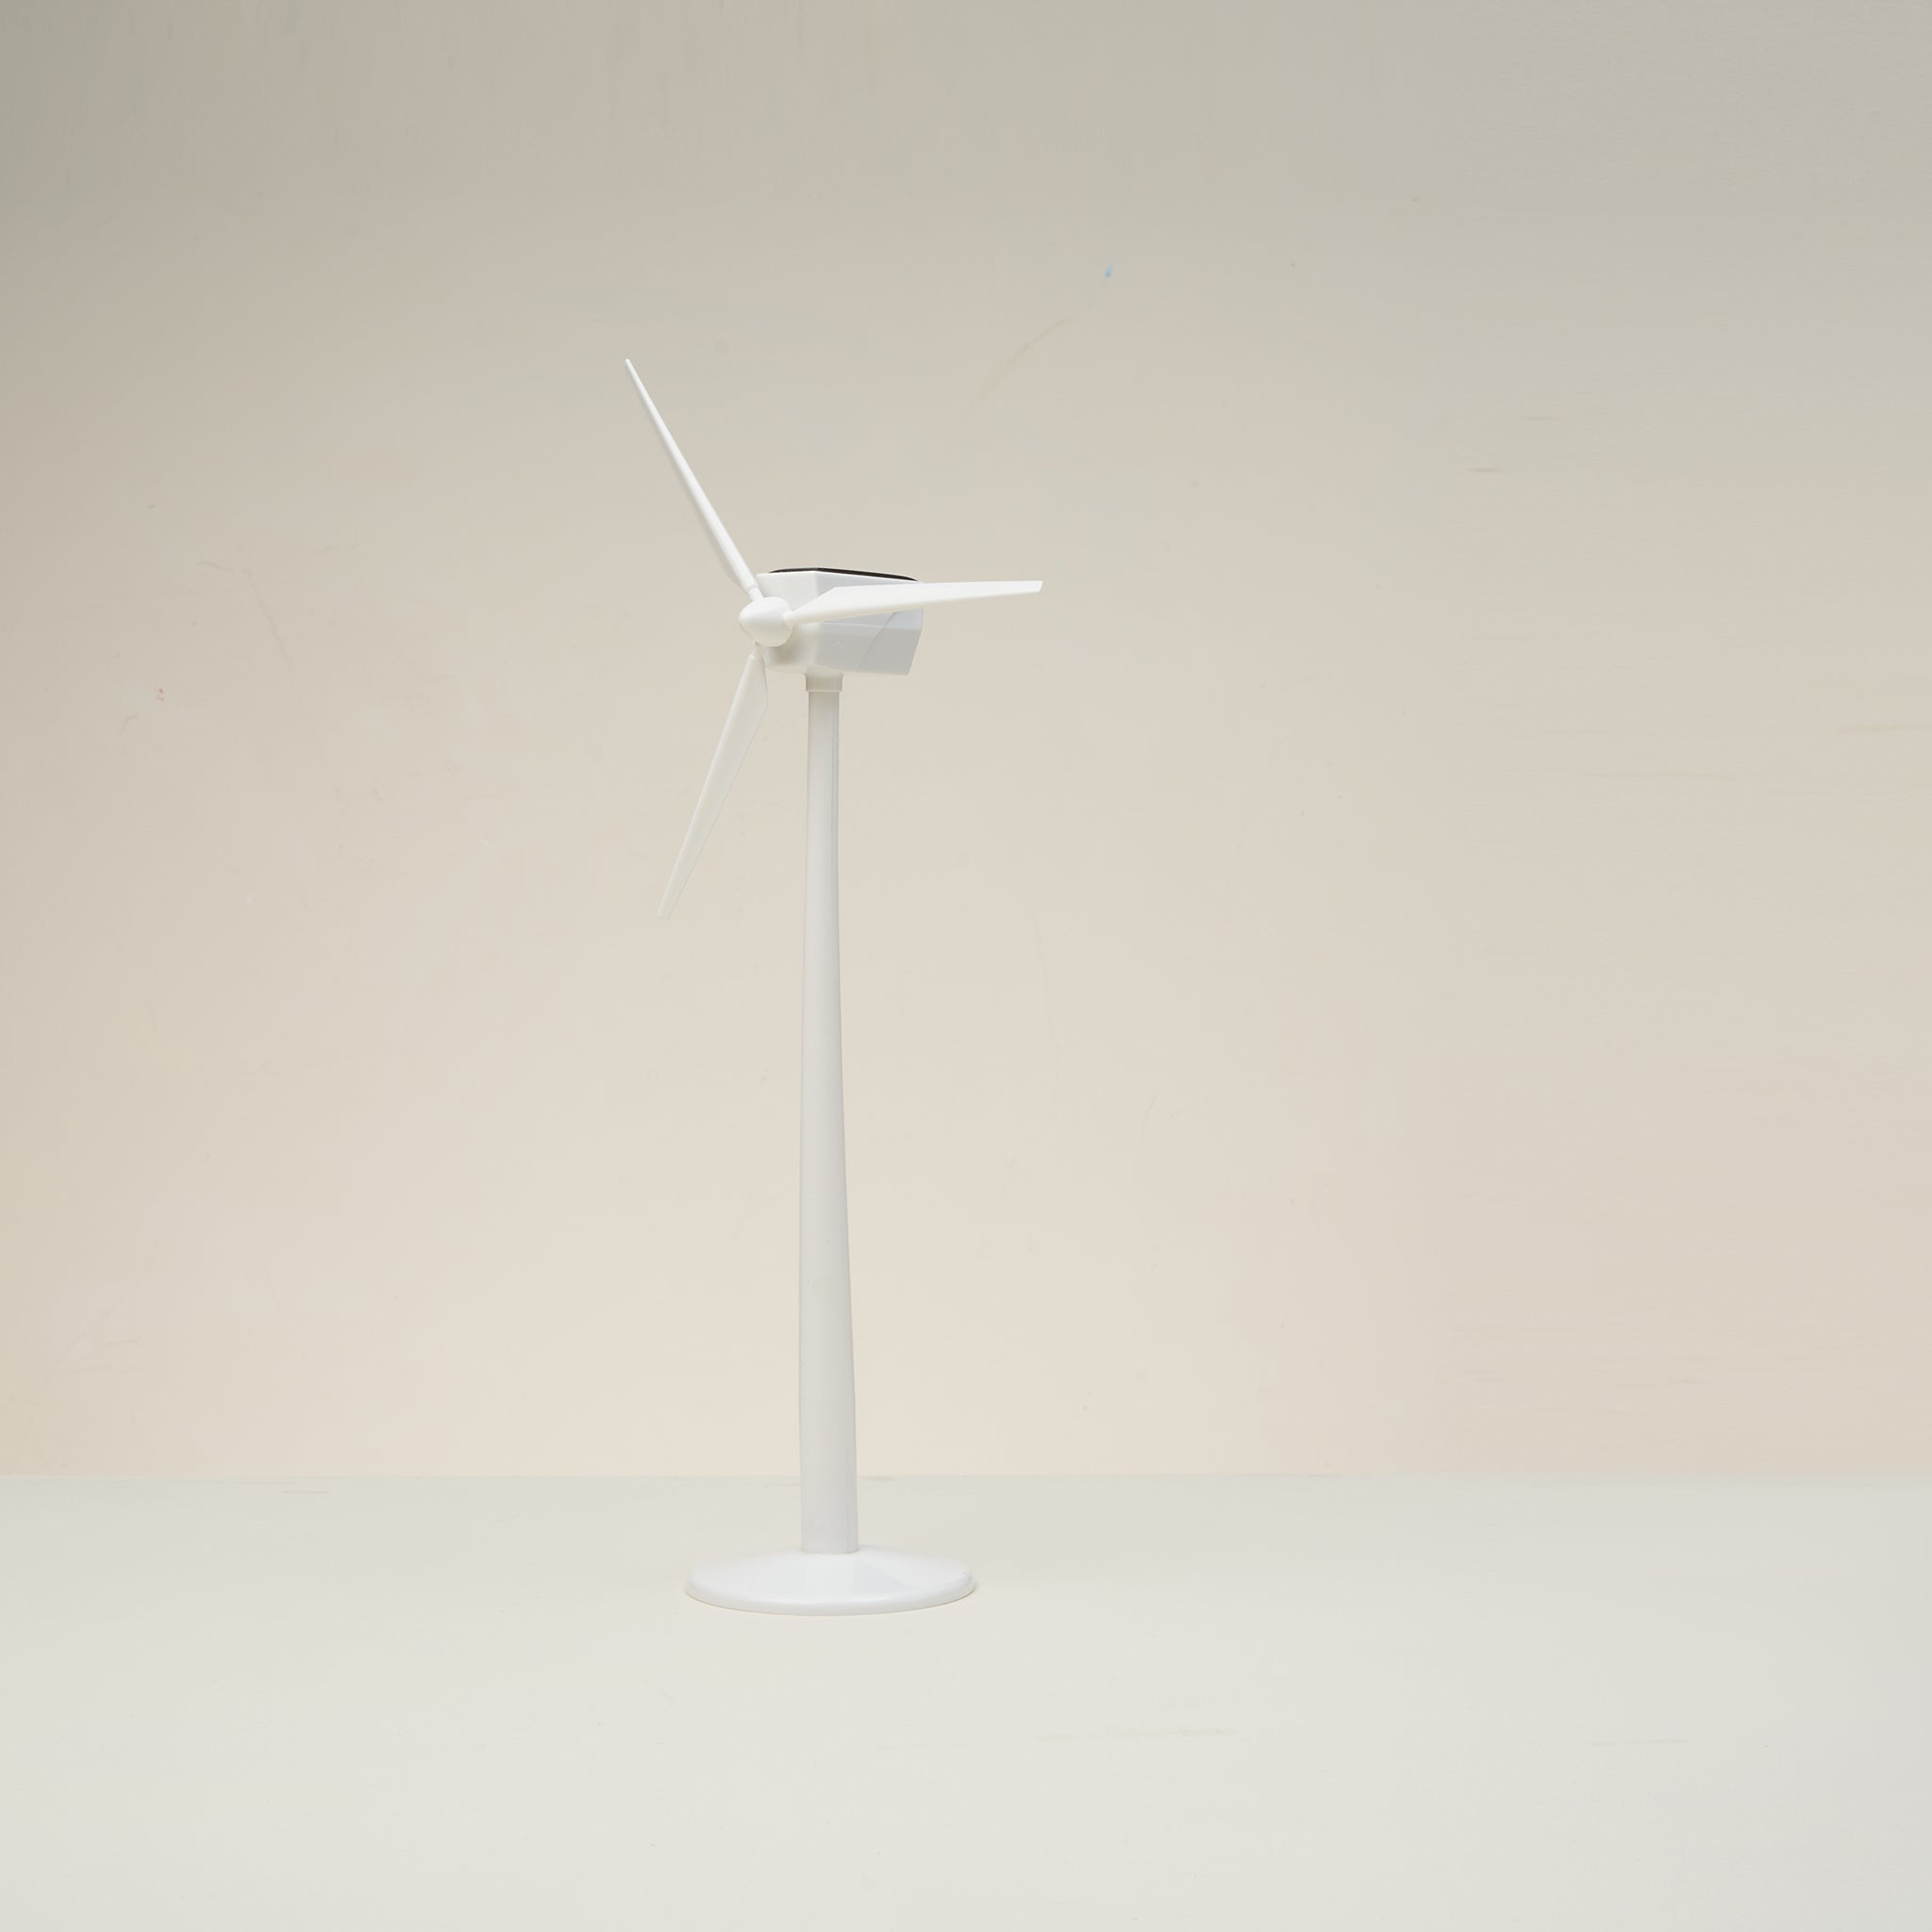 Solar Powered Wind Turbine Model Kit